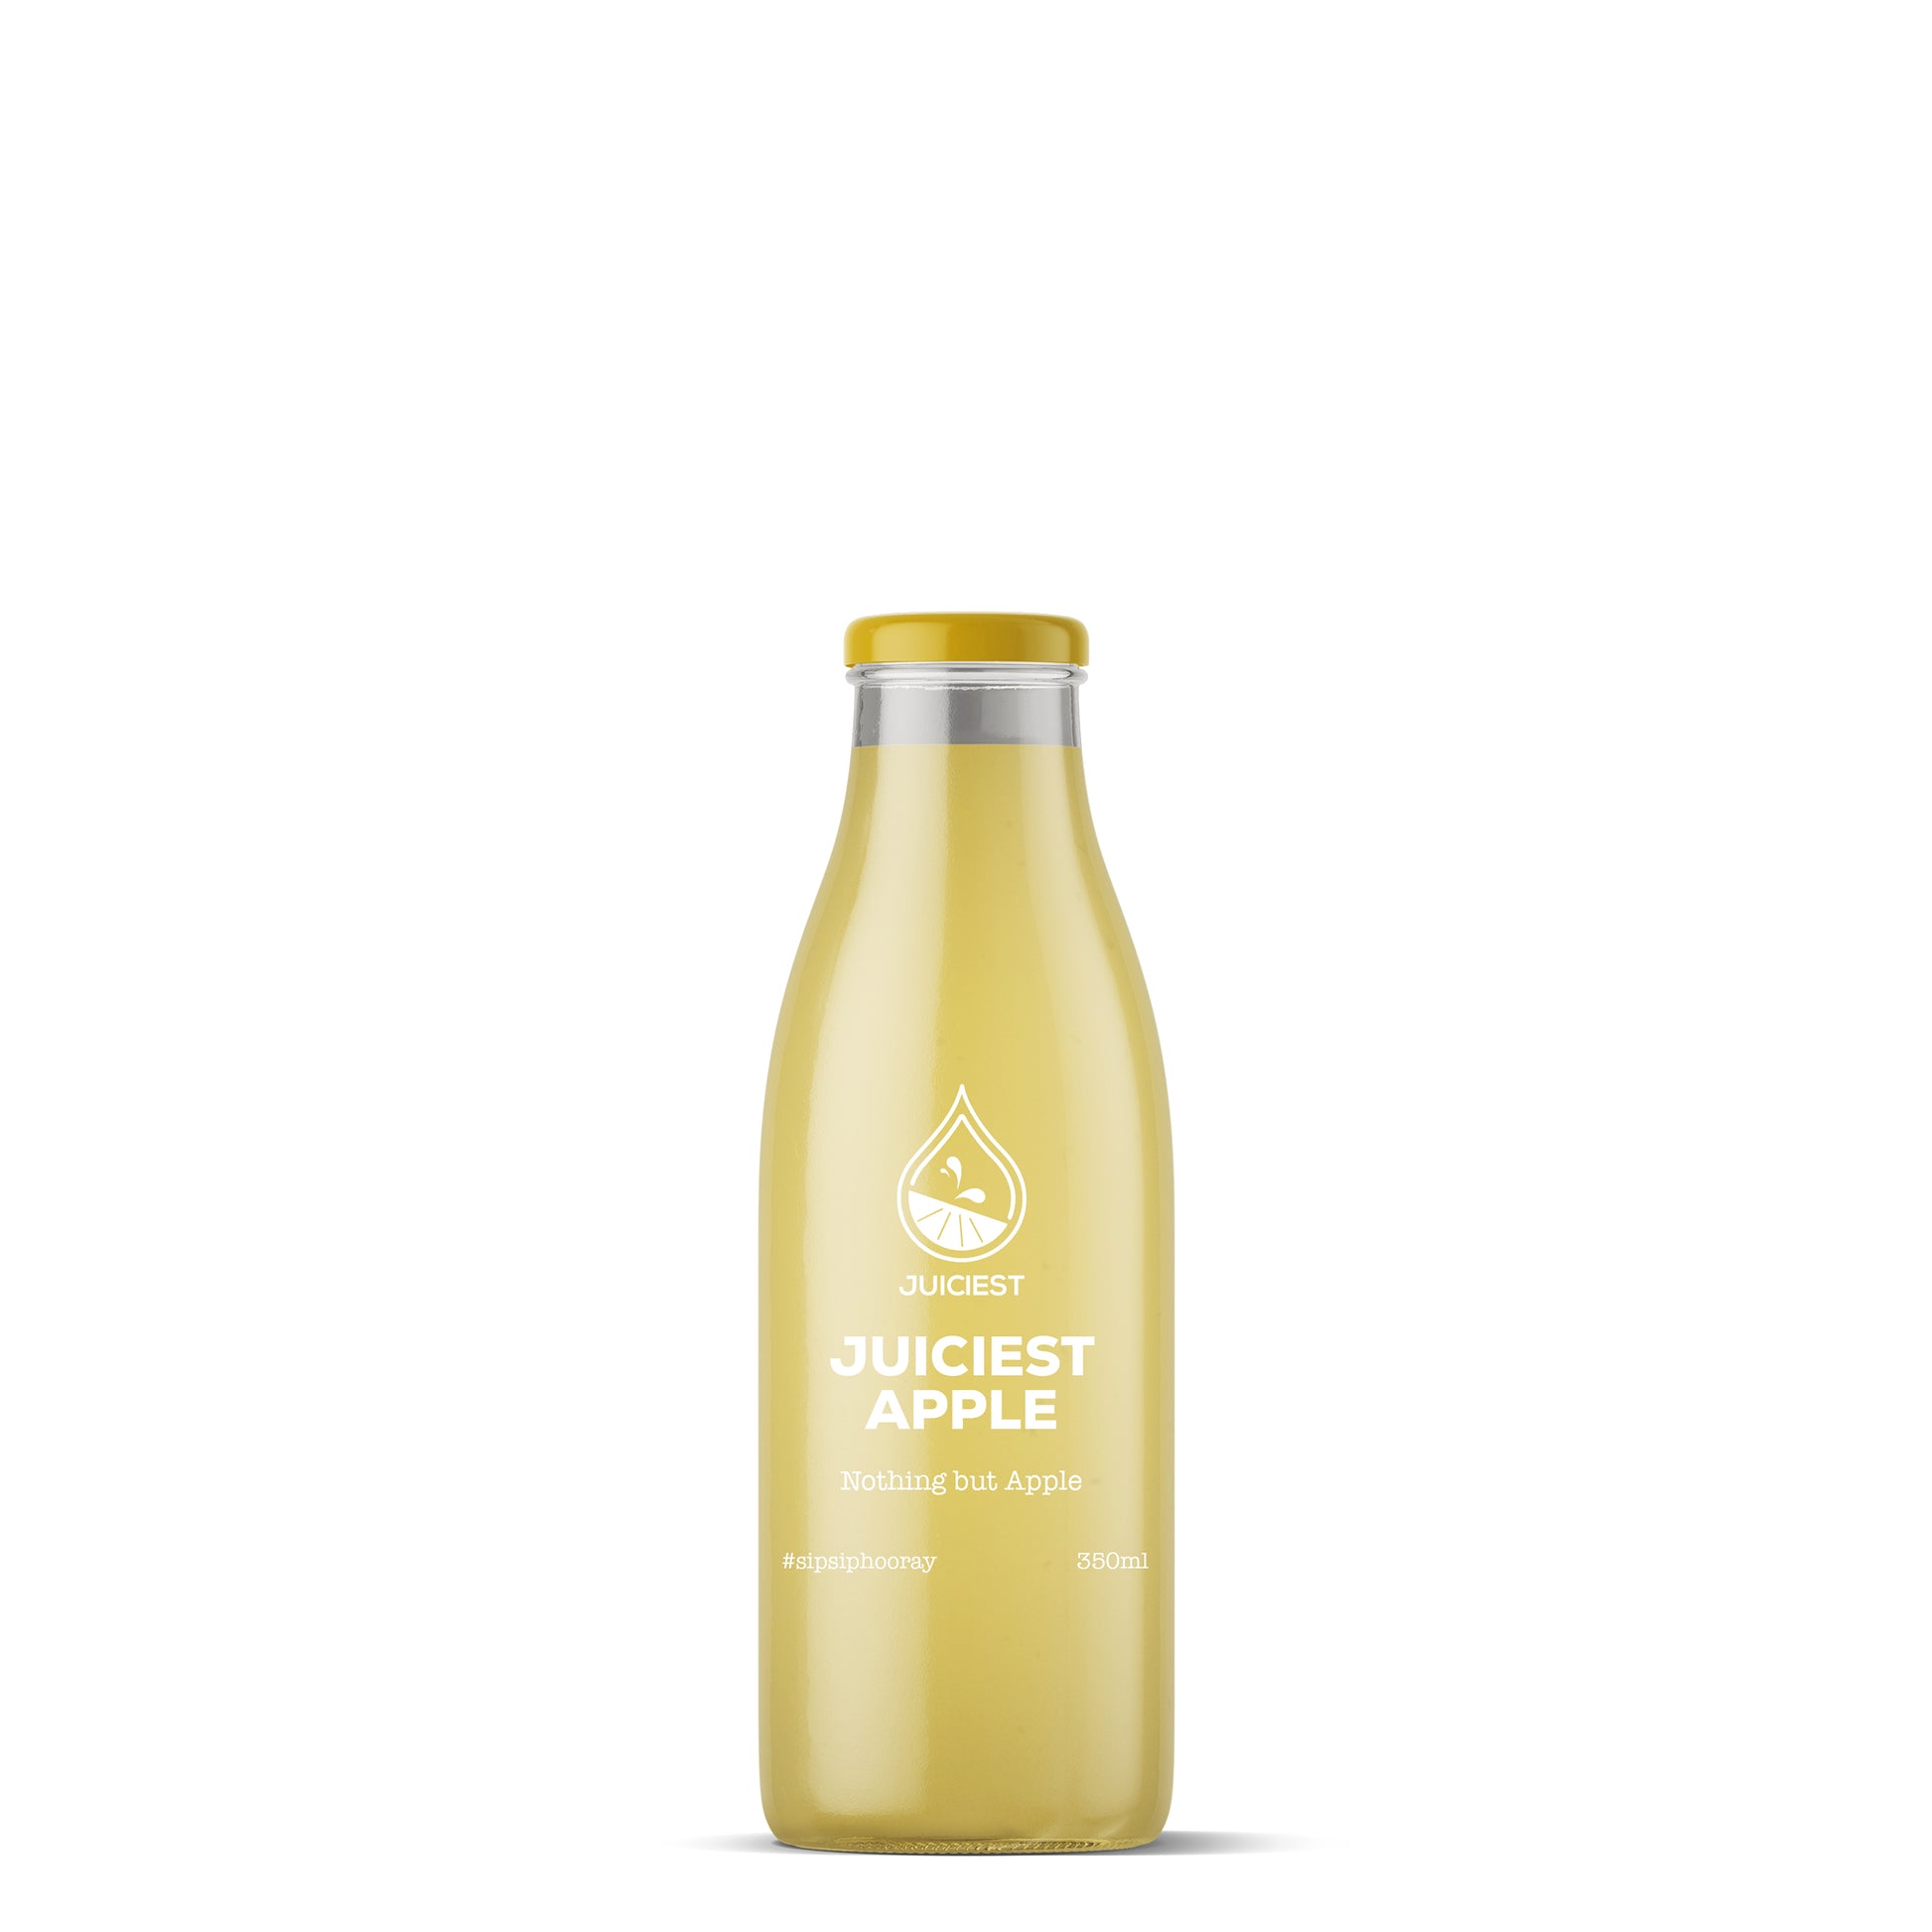 Juiciest Apple 350ml bottle